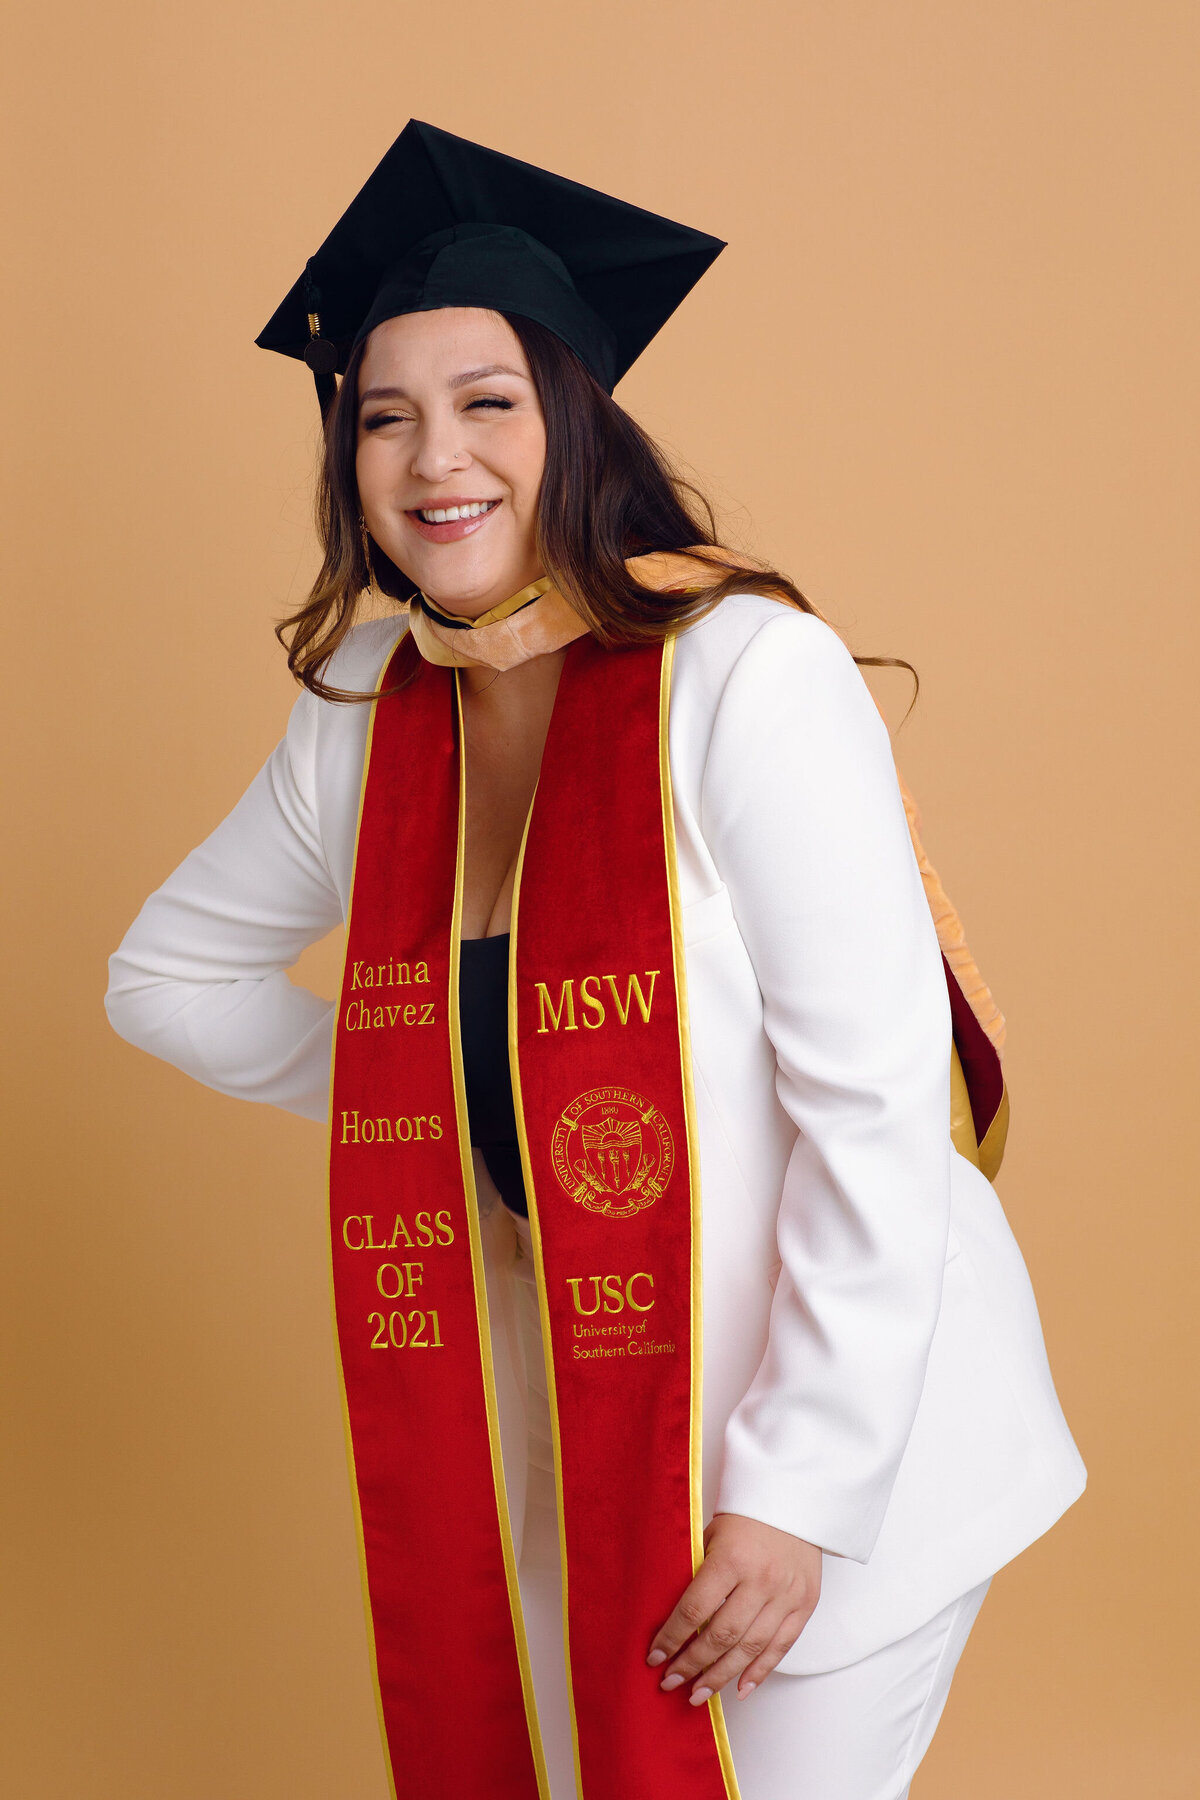 Graduation Portrait Of Young Woman Wearing White Suit And Black Graduation Cap Los Angeles